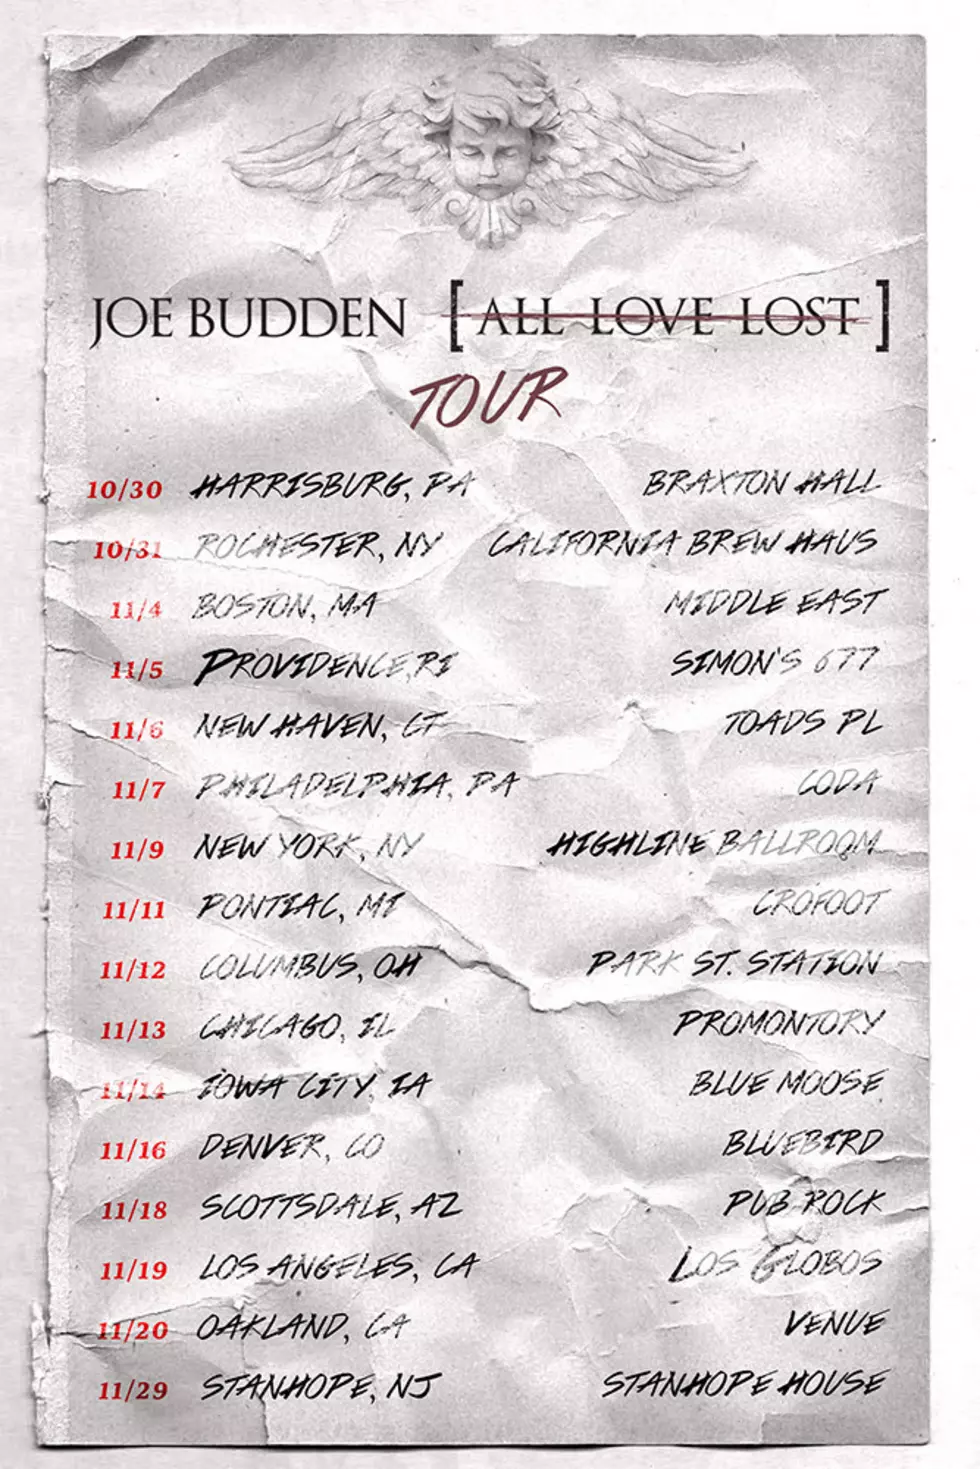 Joe Budden Announces 'All Love Lost' Tour